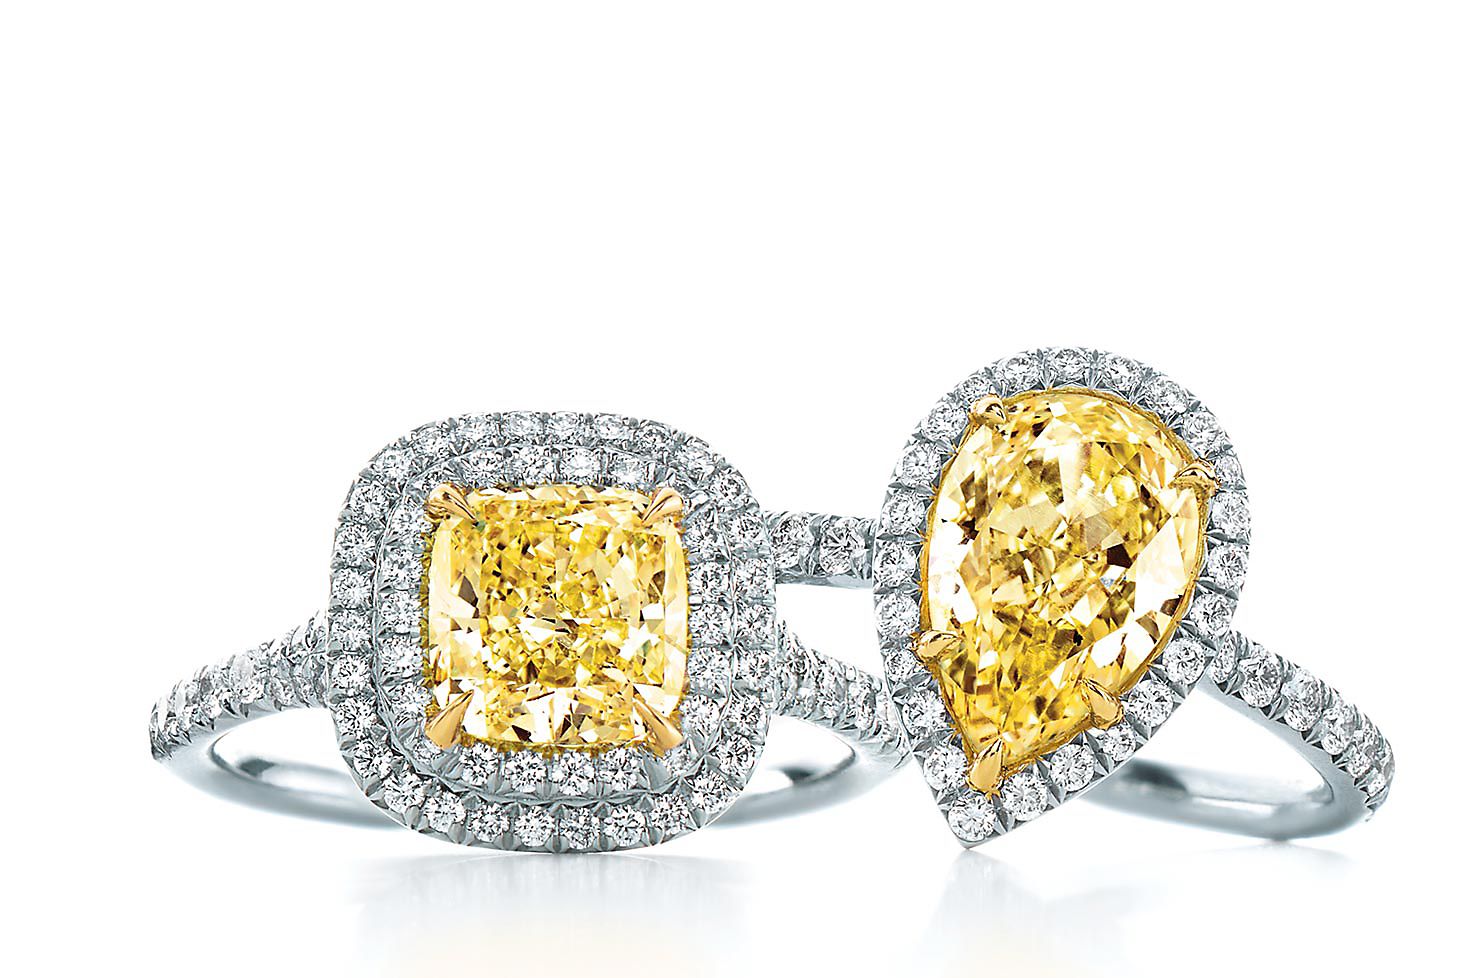 Tiffany Yellow Diamonds Jewelry Collection Tiffany & Co.